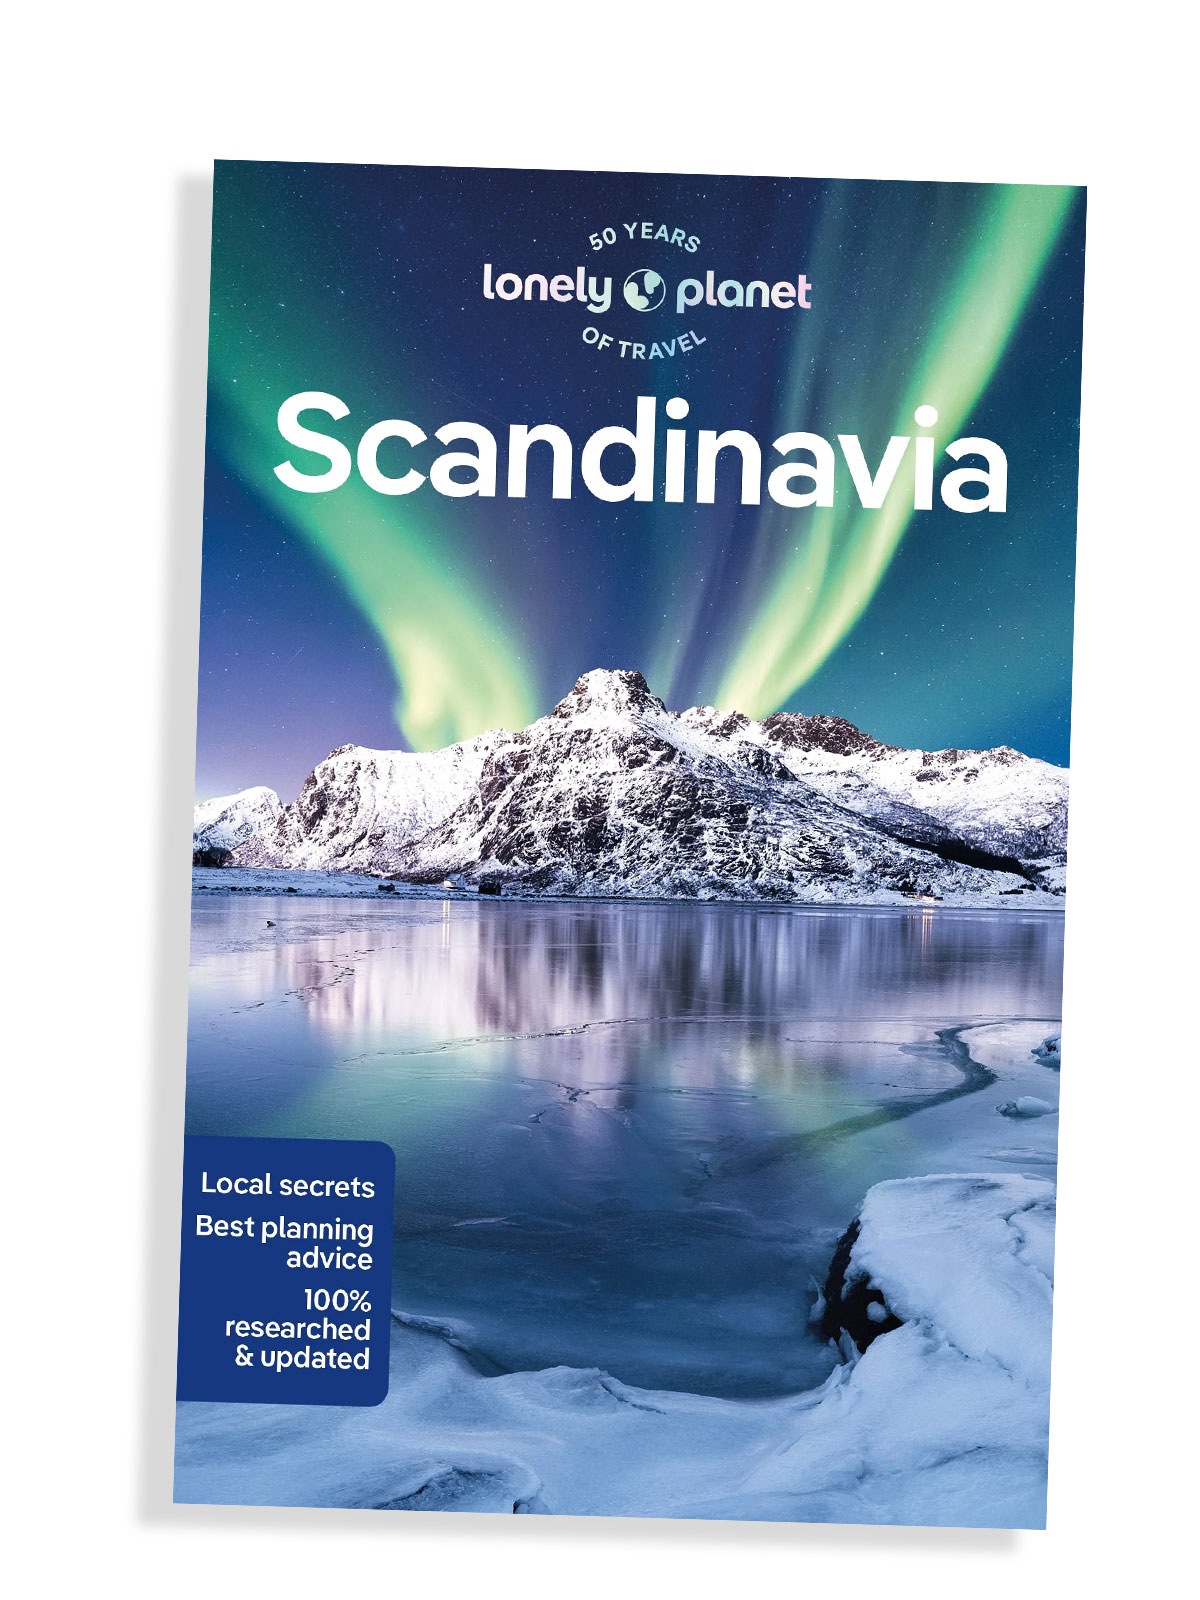 Scandinavia Lonely Planet